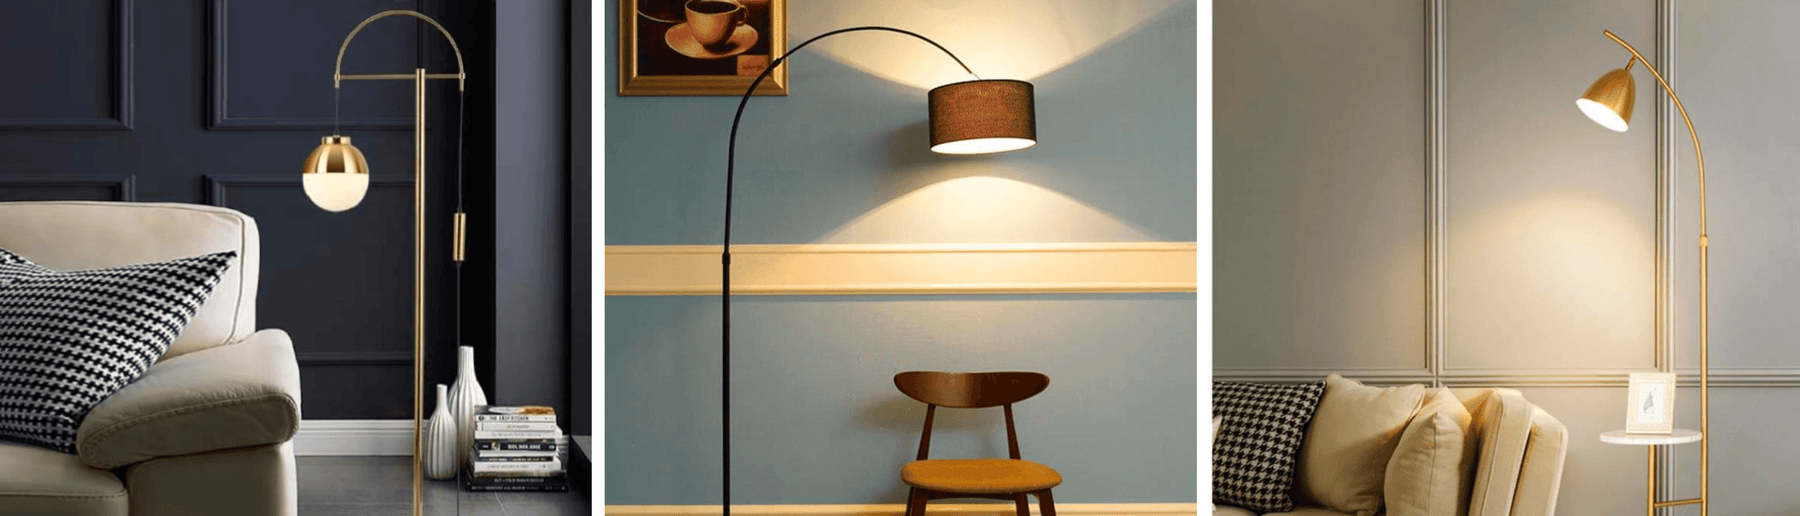 15% off lightings from Light Makers - HomesToLife